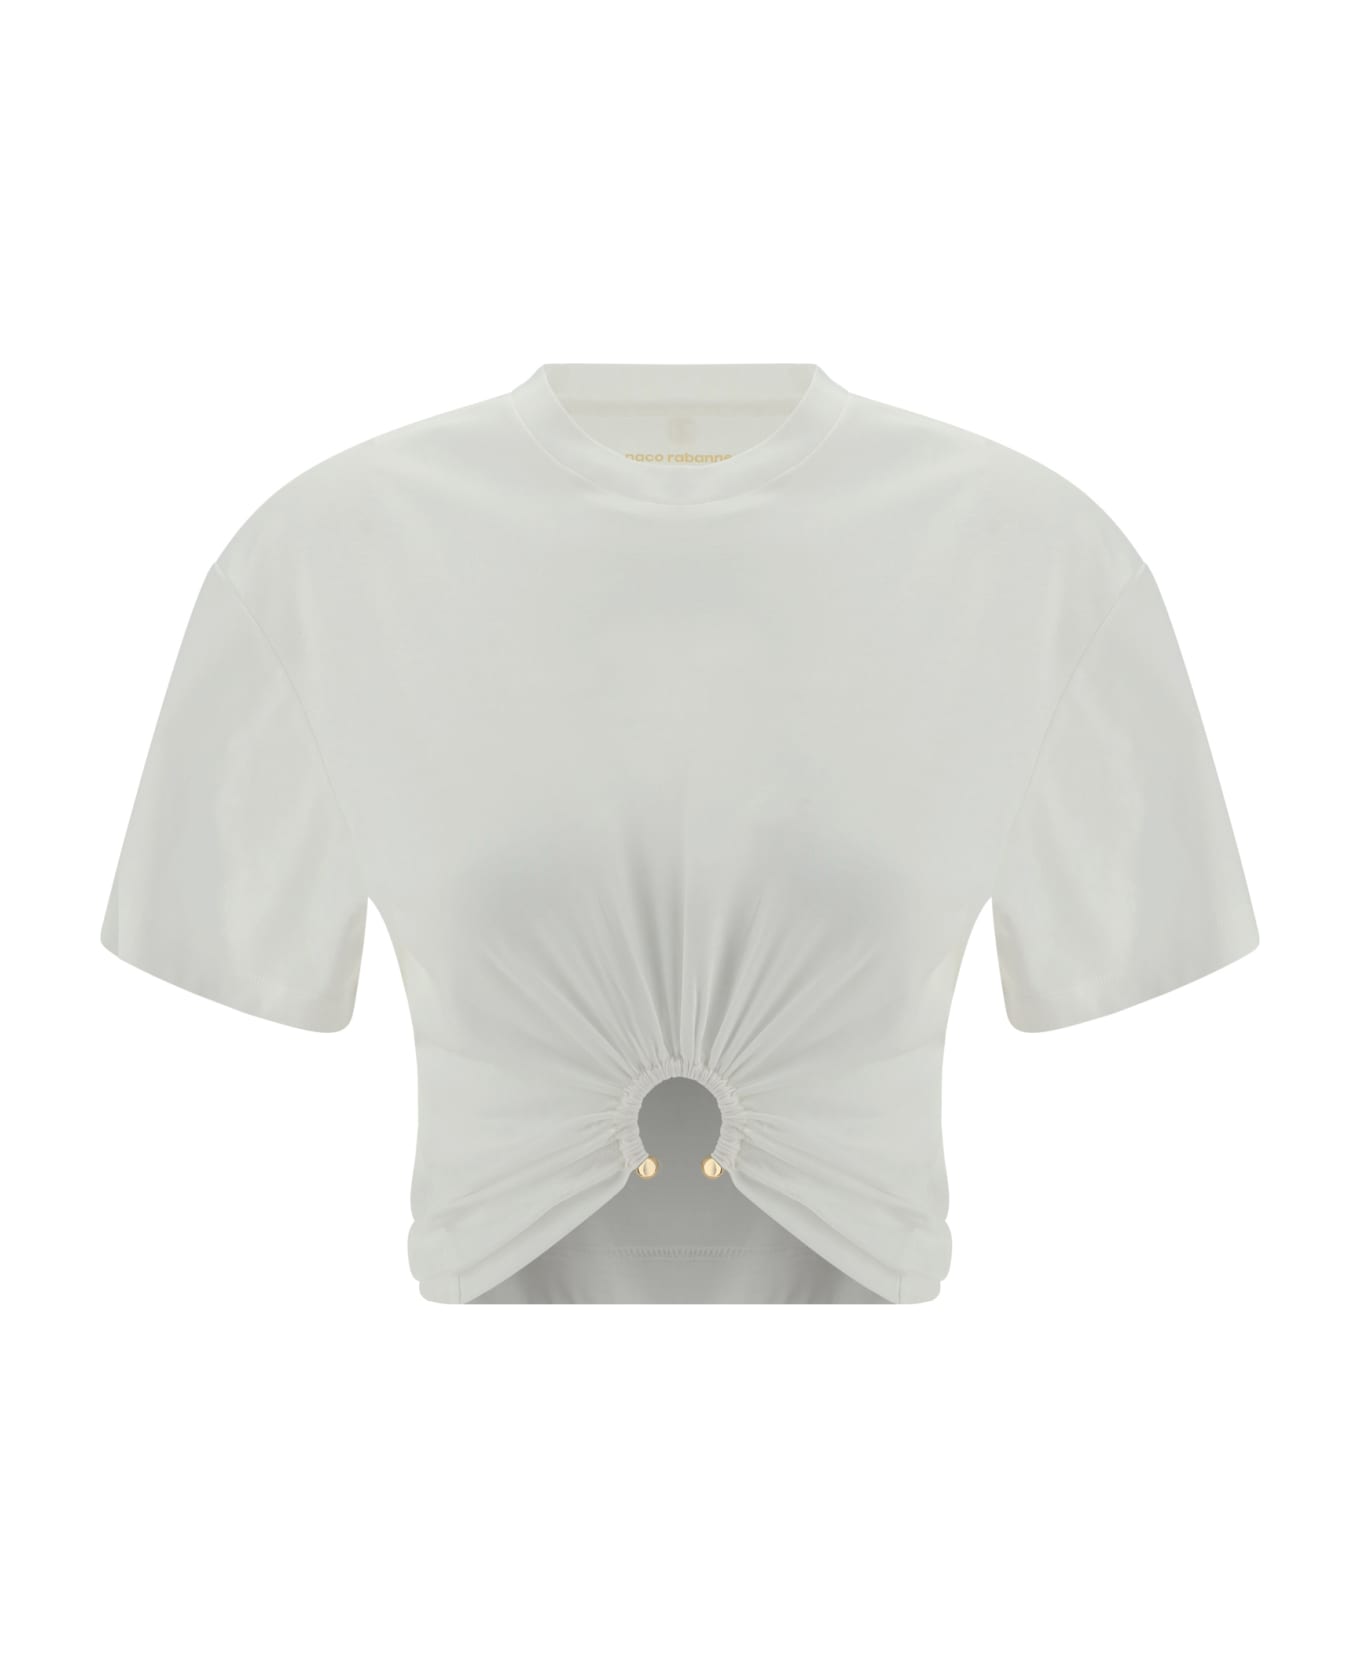 Paco Rabanne T-shirt - Off White Tシャツ